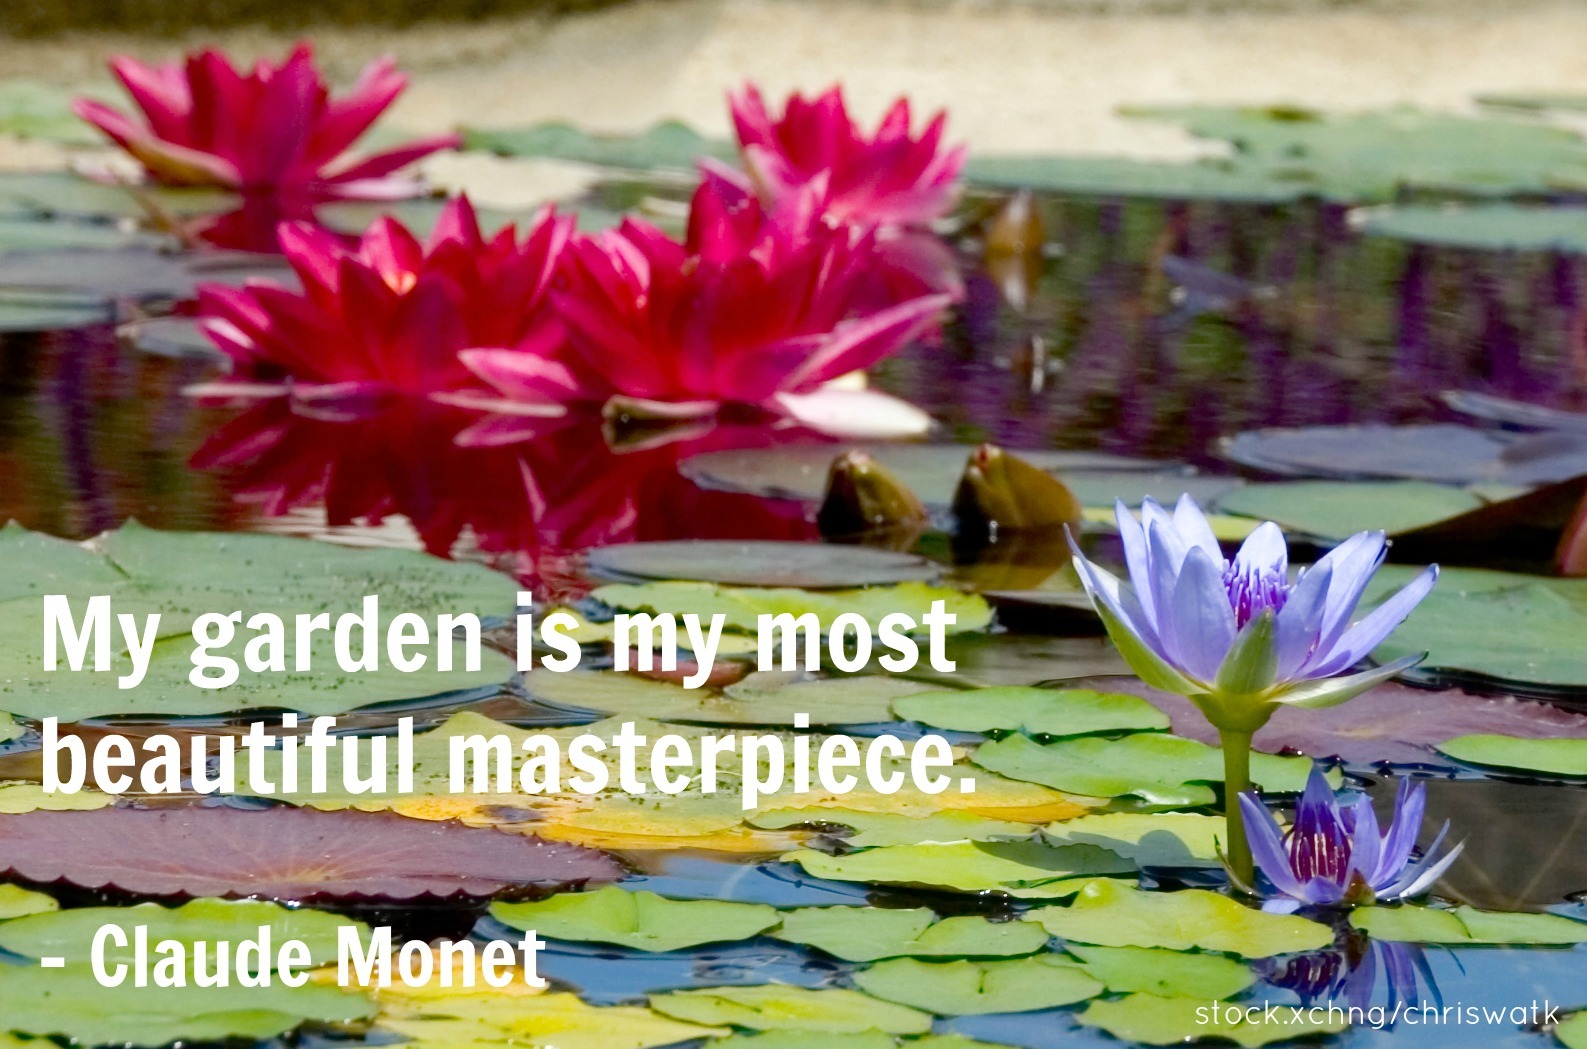 Claude Monet gardening quote